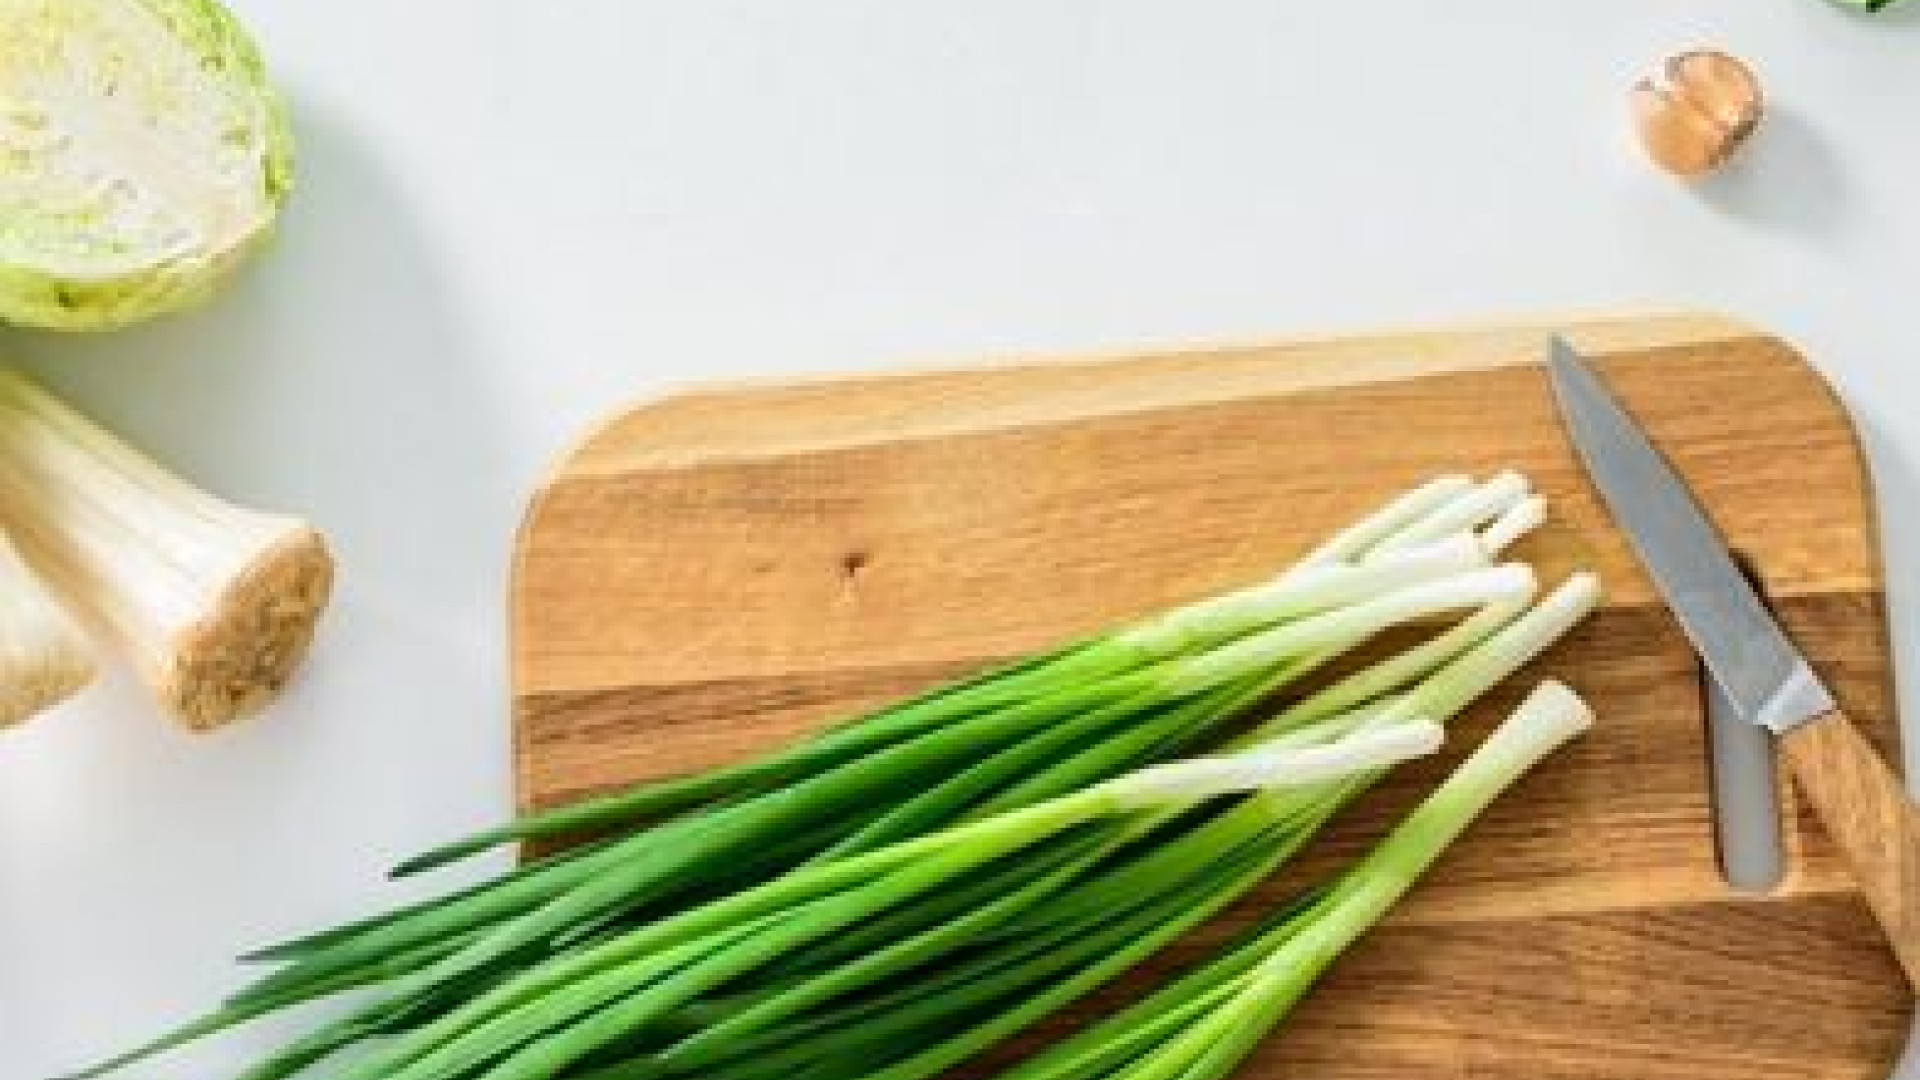 Spring onion/Green onion